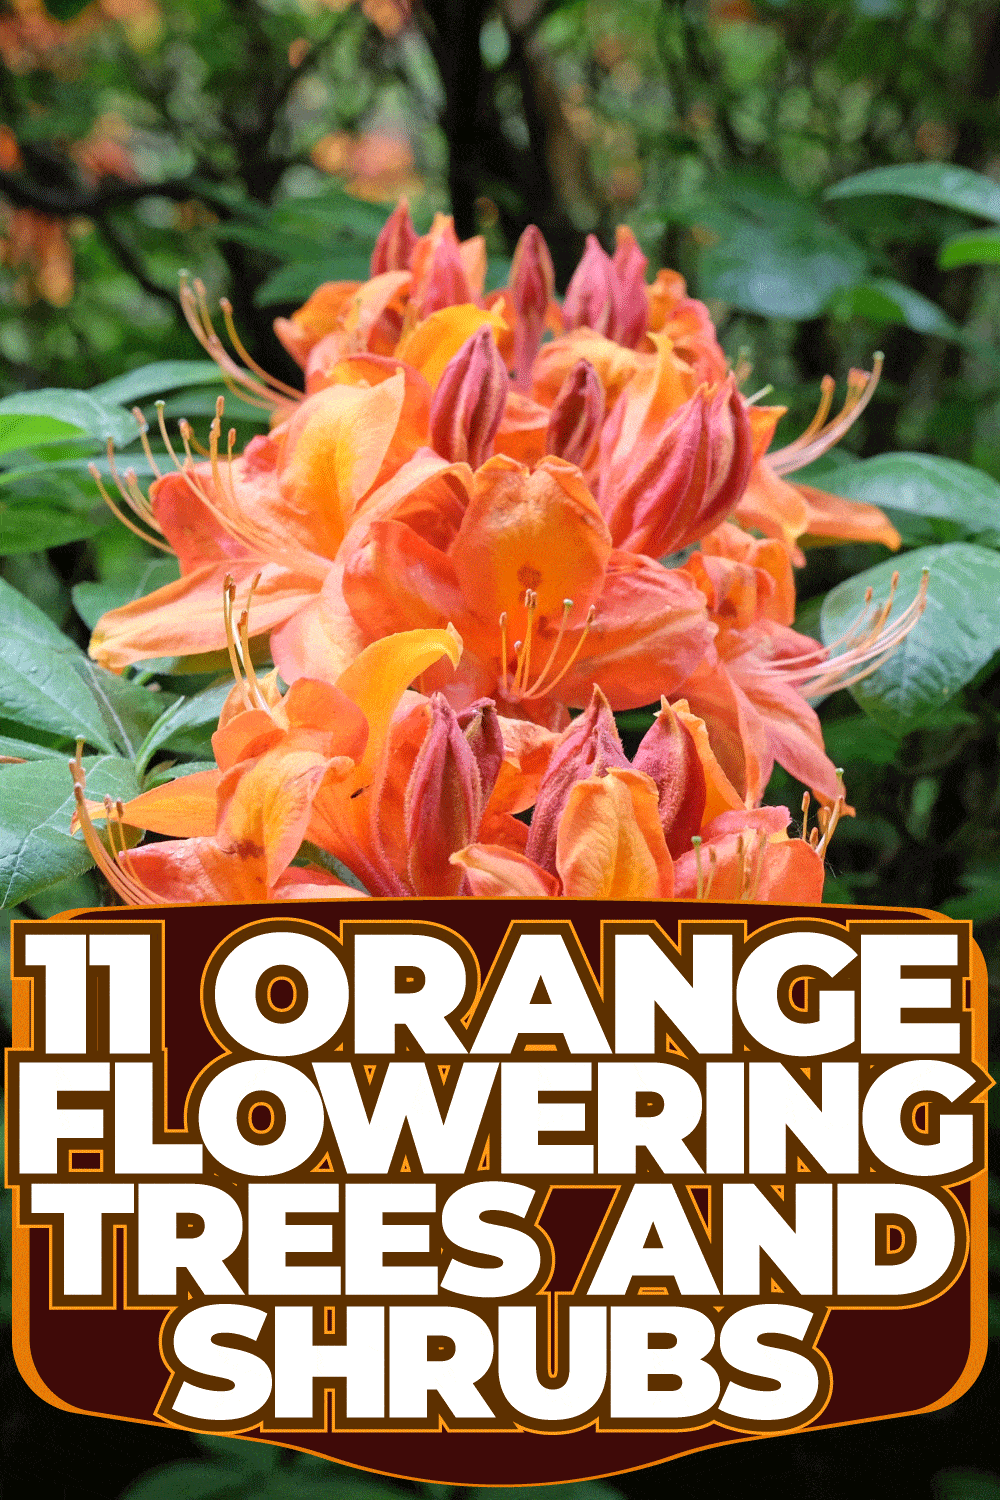 11 Orange Flowering Trees And Shrubs